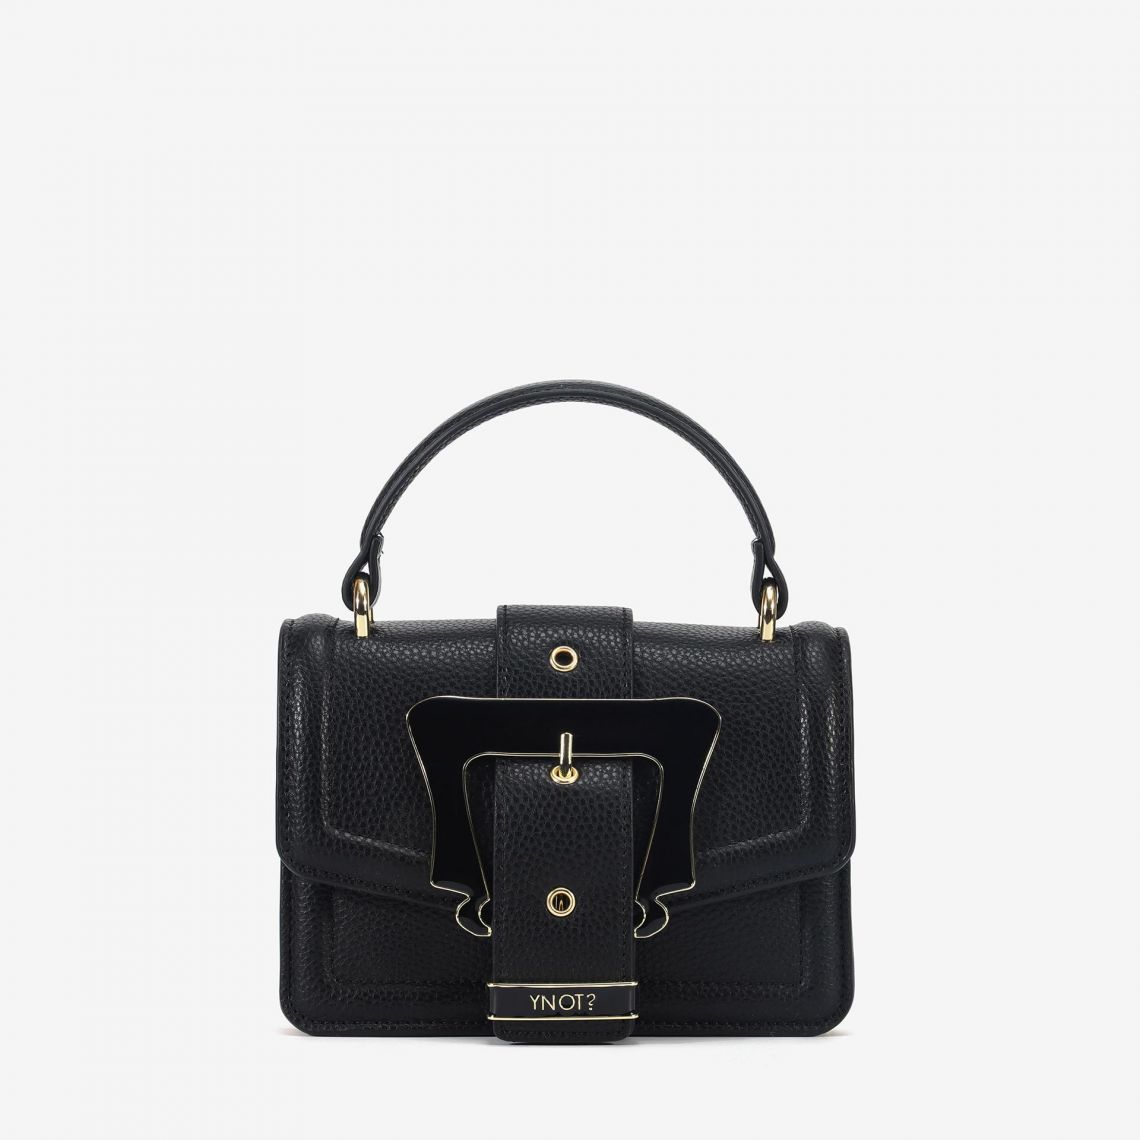 (image for) borse bag in offerta Pattina Blacks why not borse